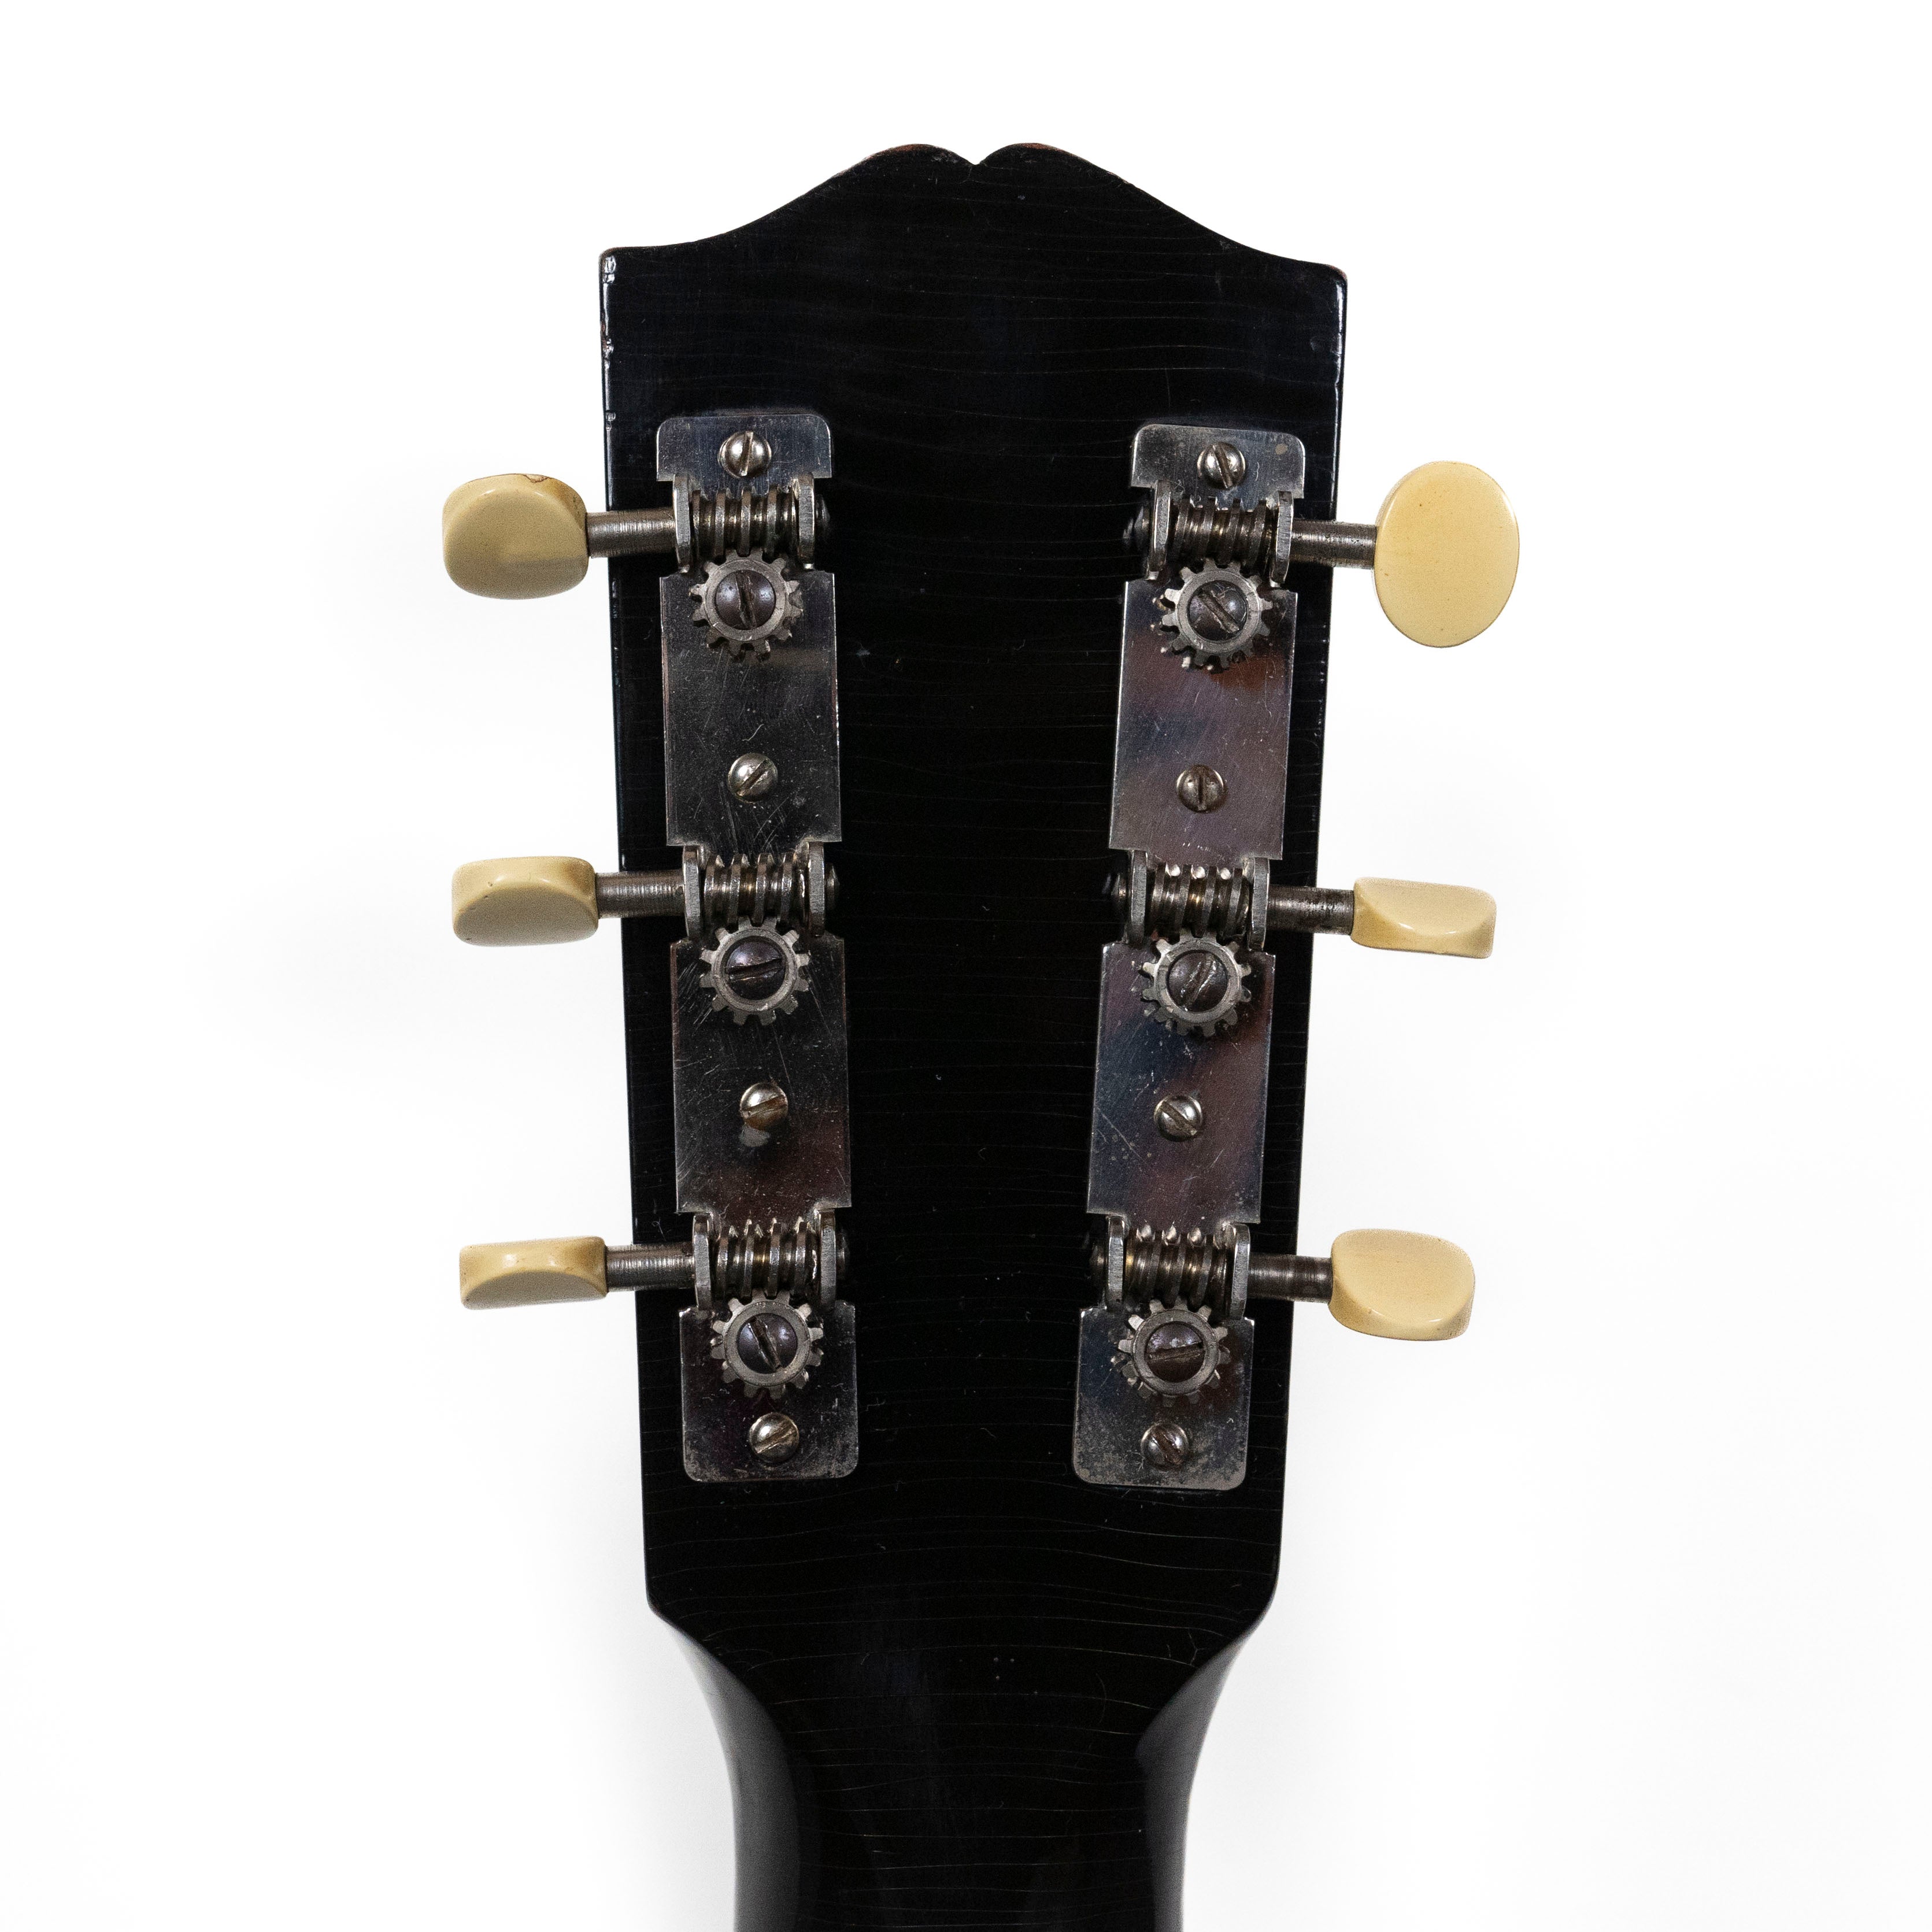 Gibson 1935 L-30 Black